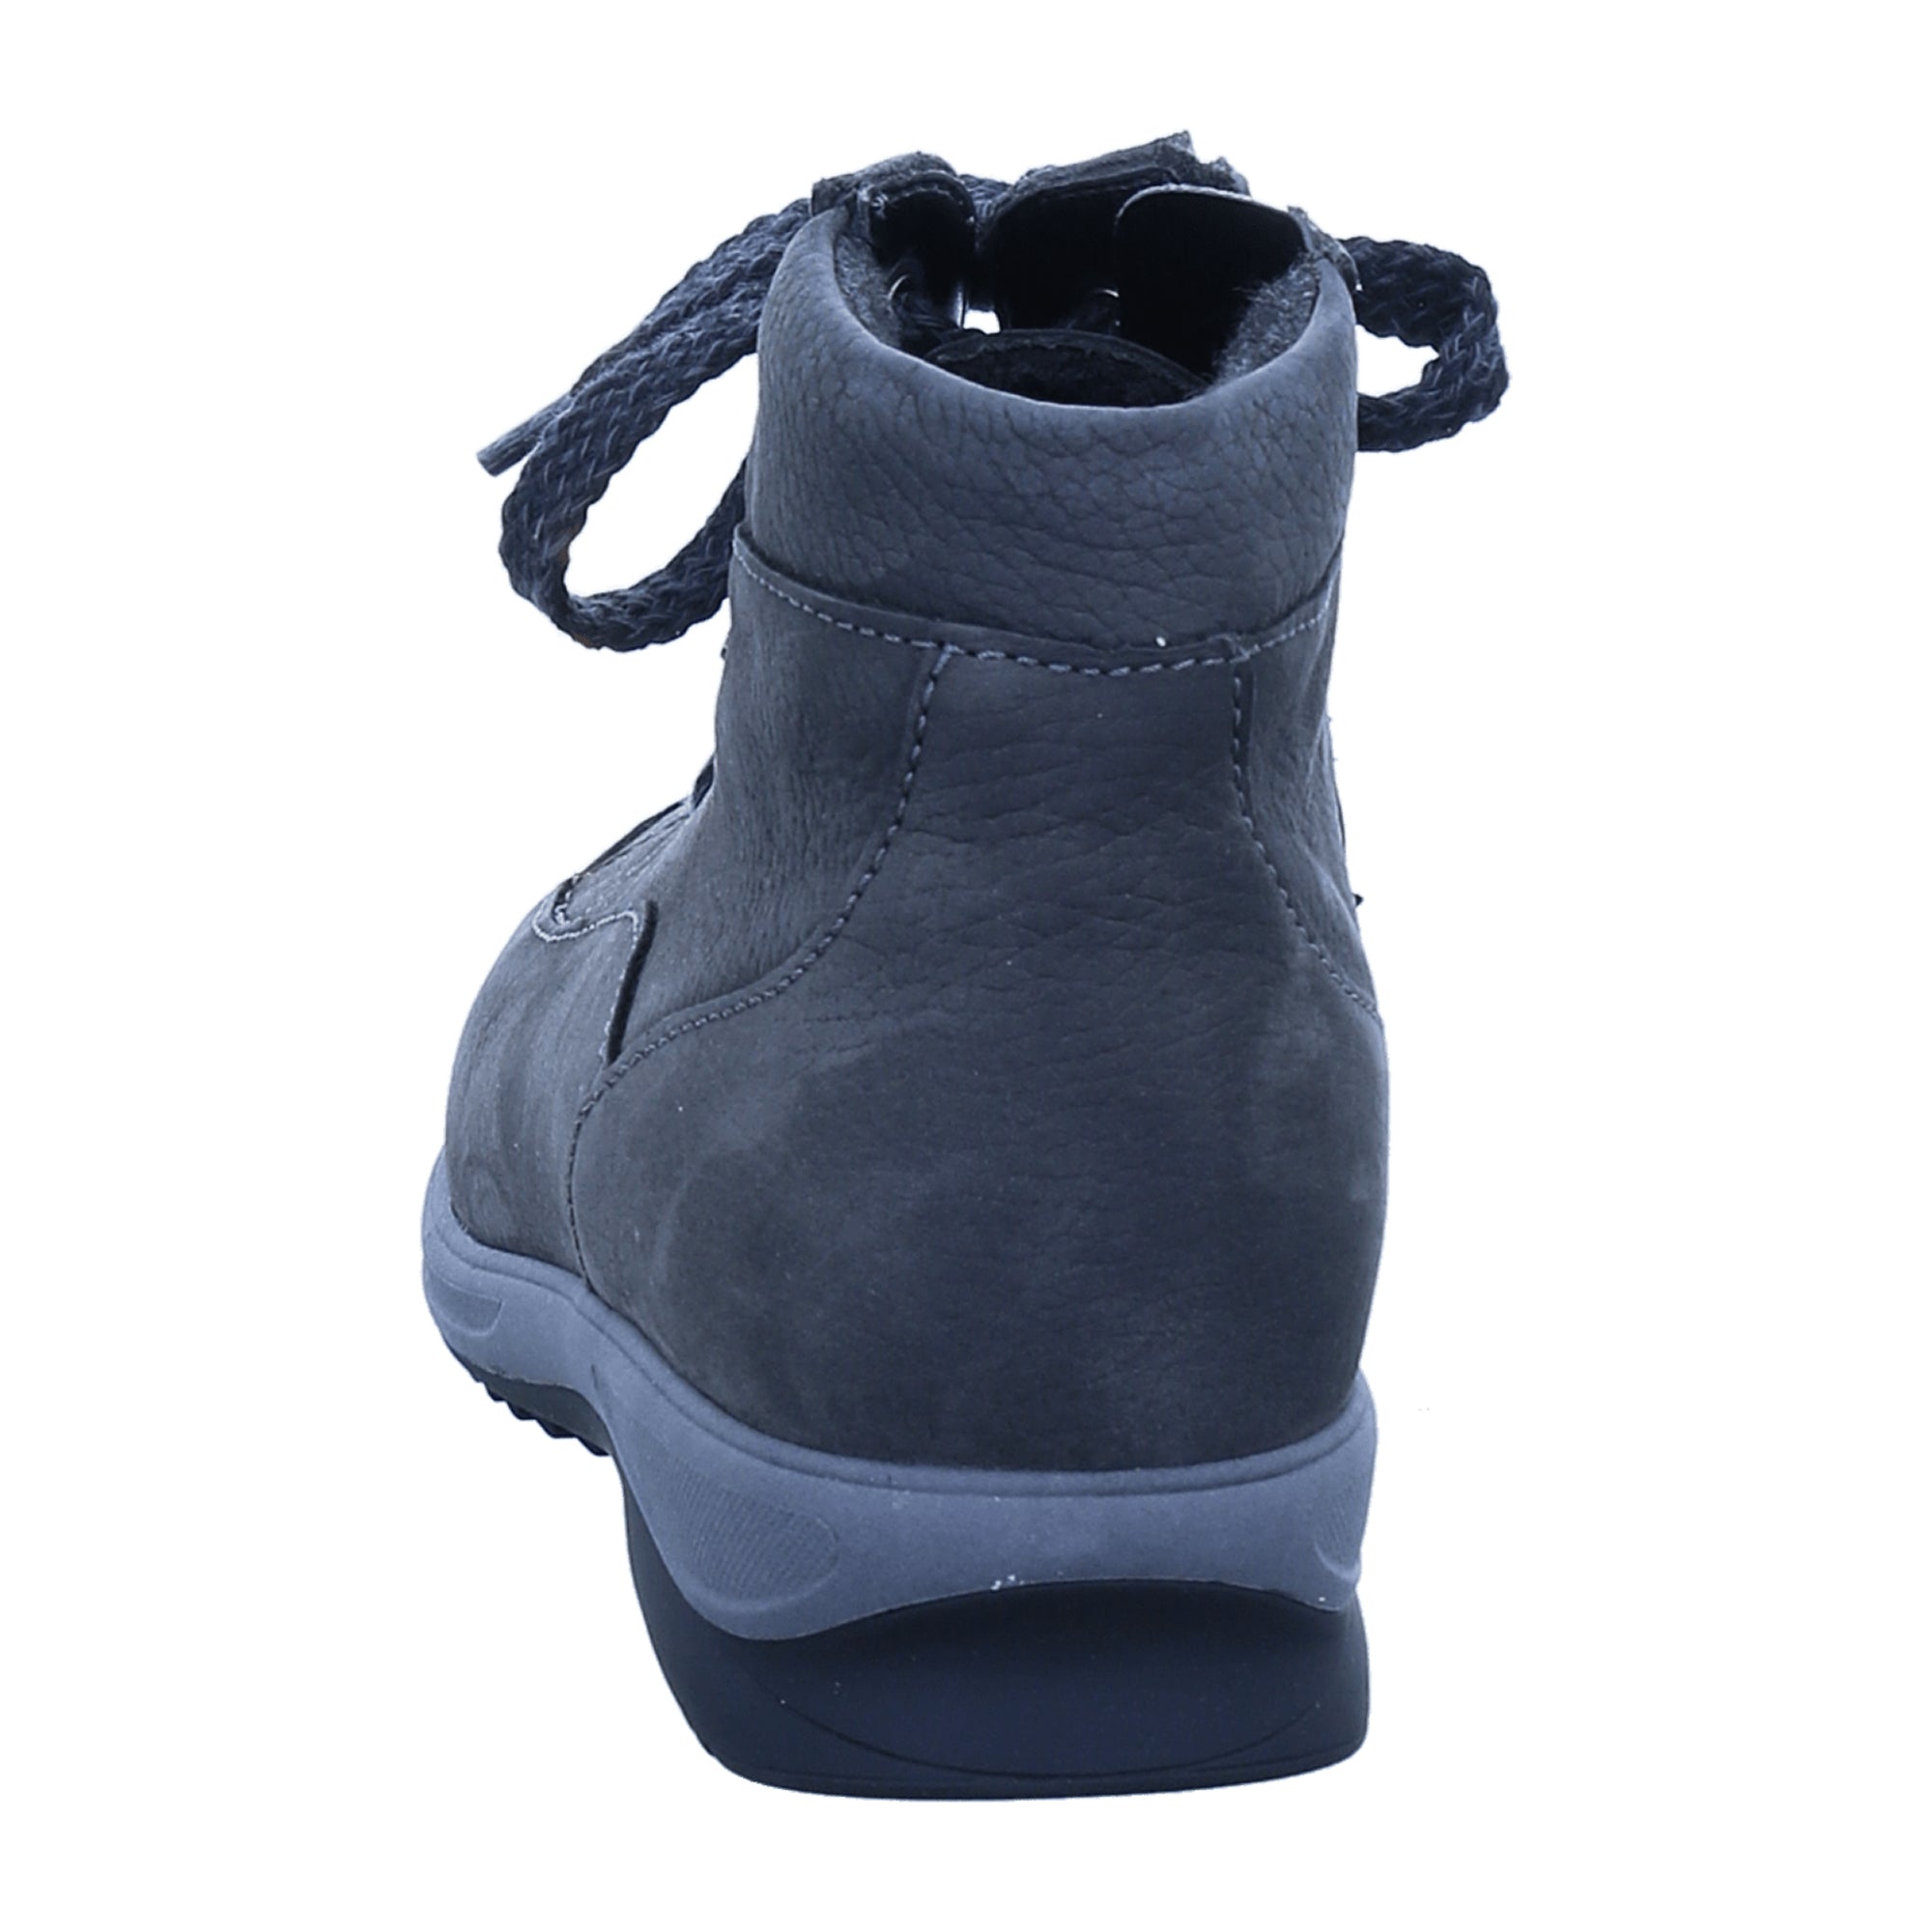 Finn Comfort Women's Stylish Comfort Ankle Boots, Grey